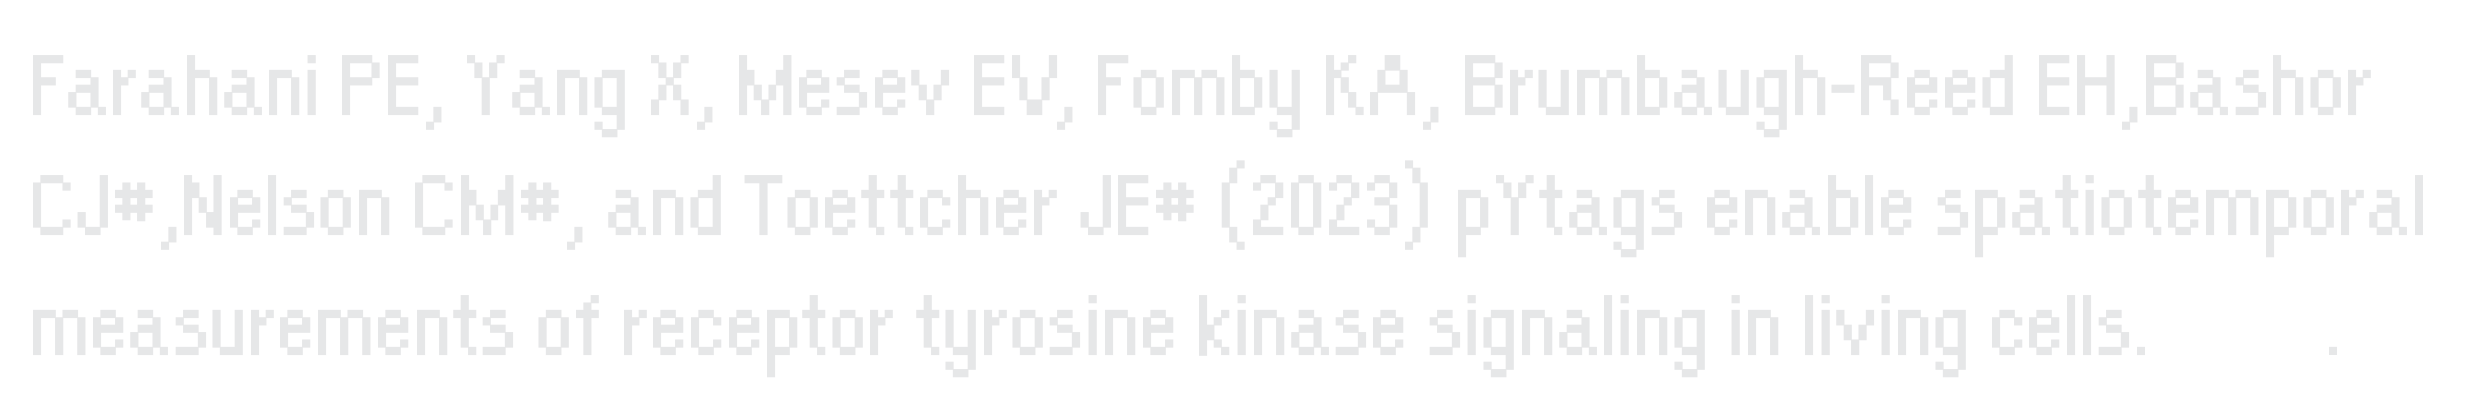 Farahani, Yang, Fomby, Bashor, Nelson, Toettcher (2022) pYtags kinase signaling BioRXiv